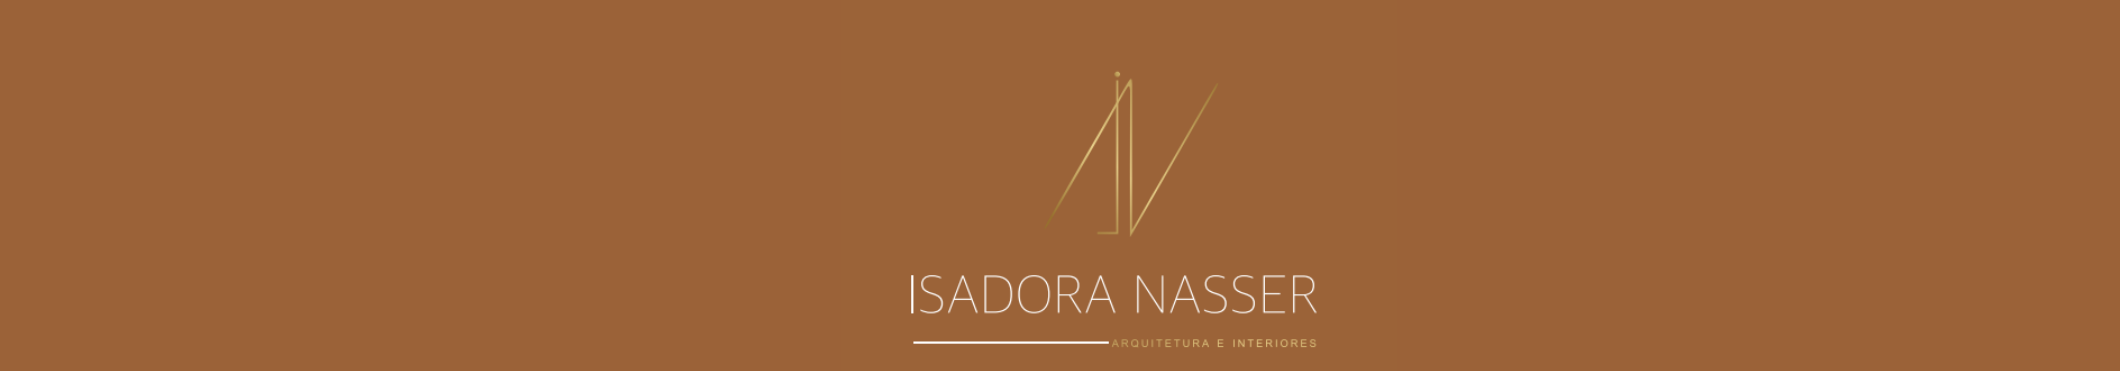 Isadora Nassers profilbanner